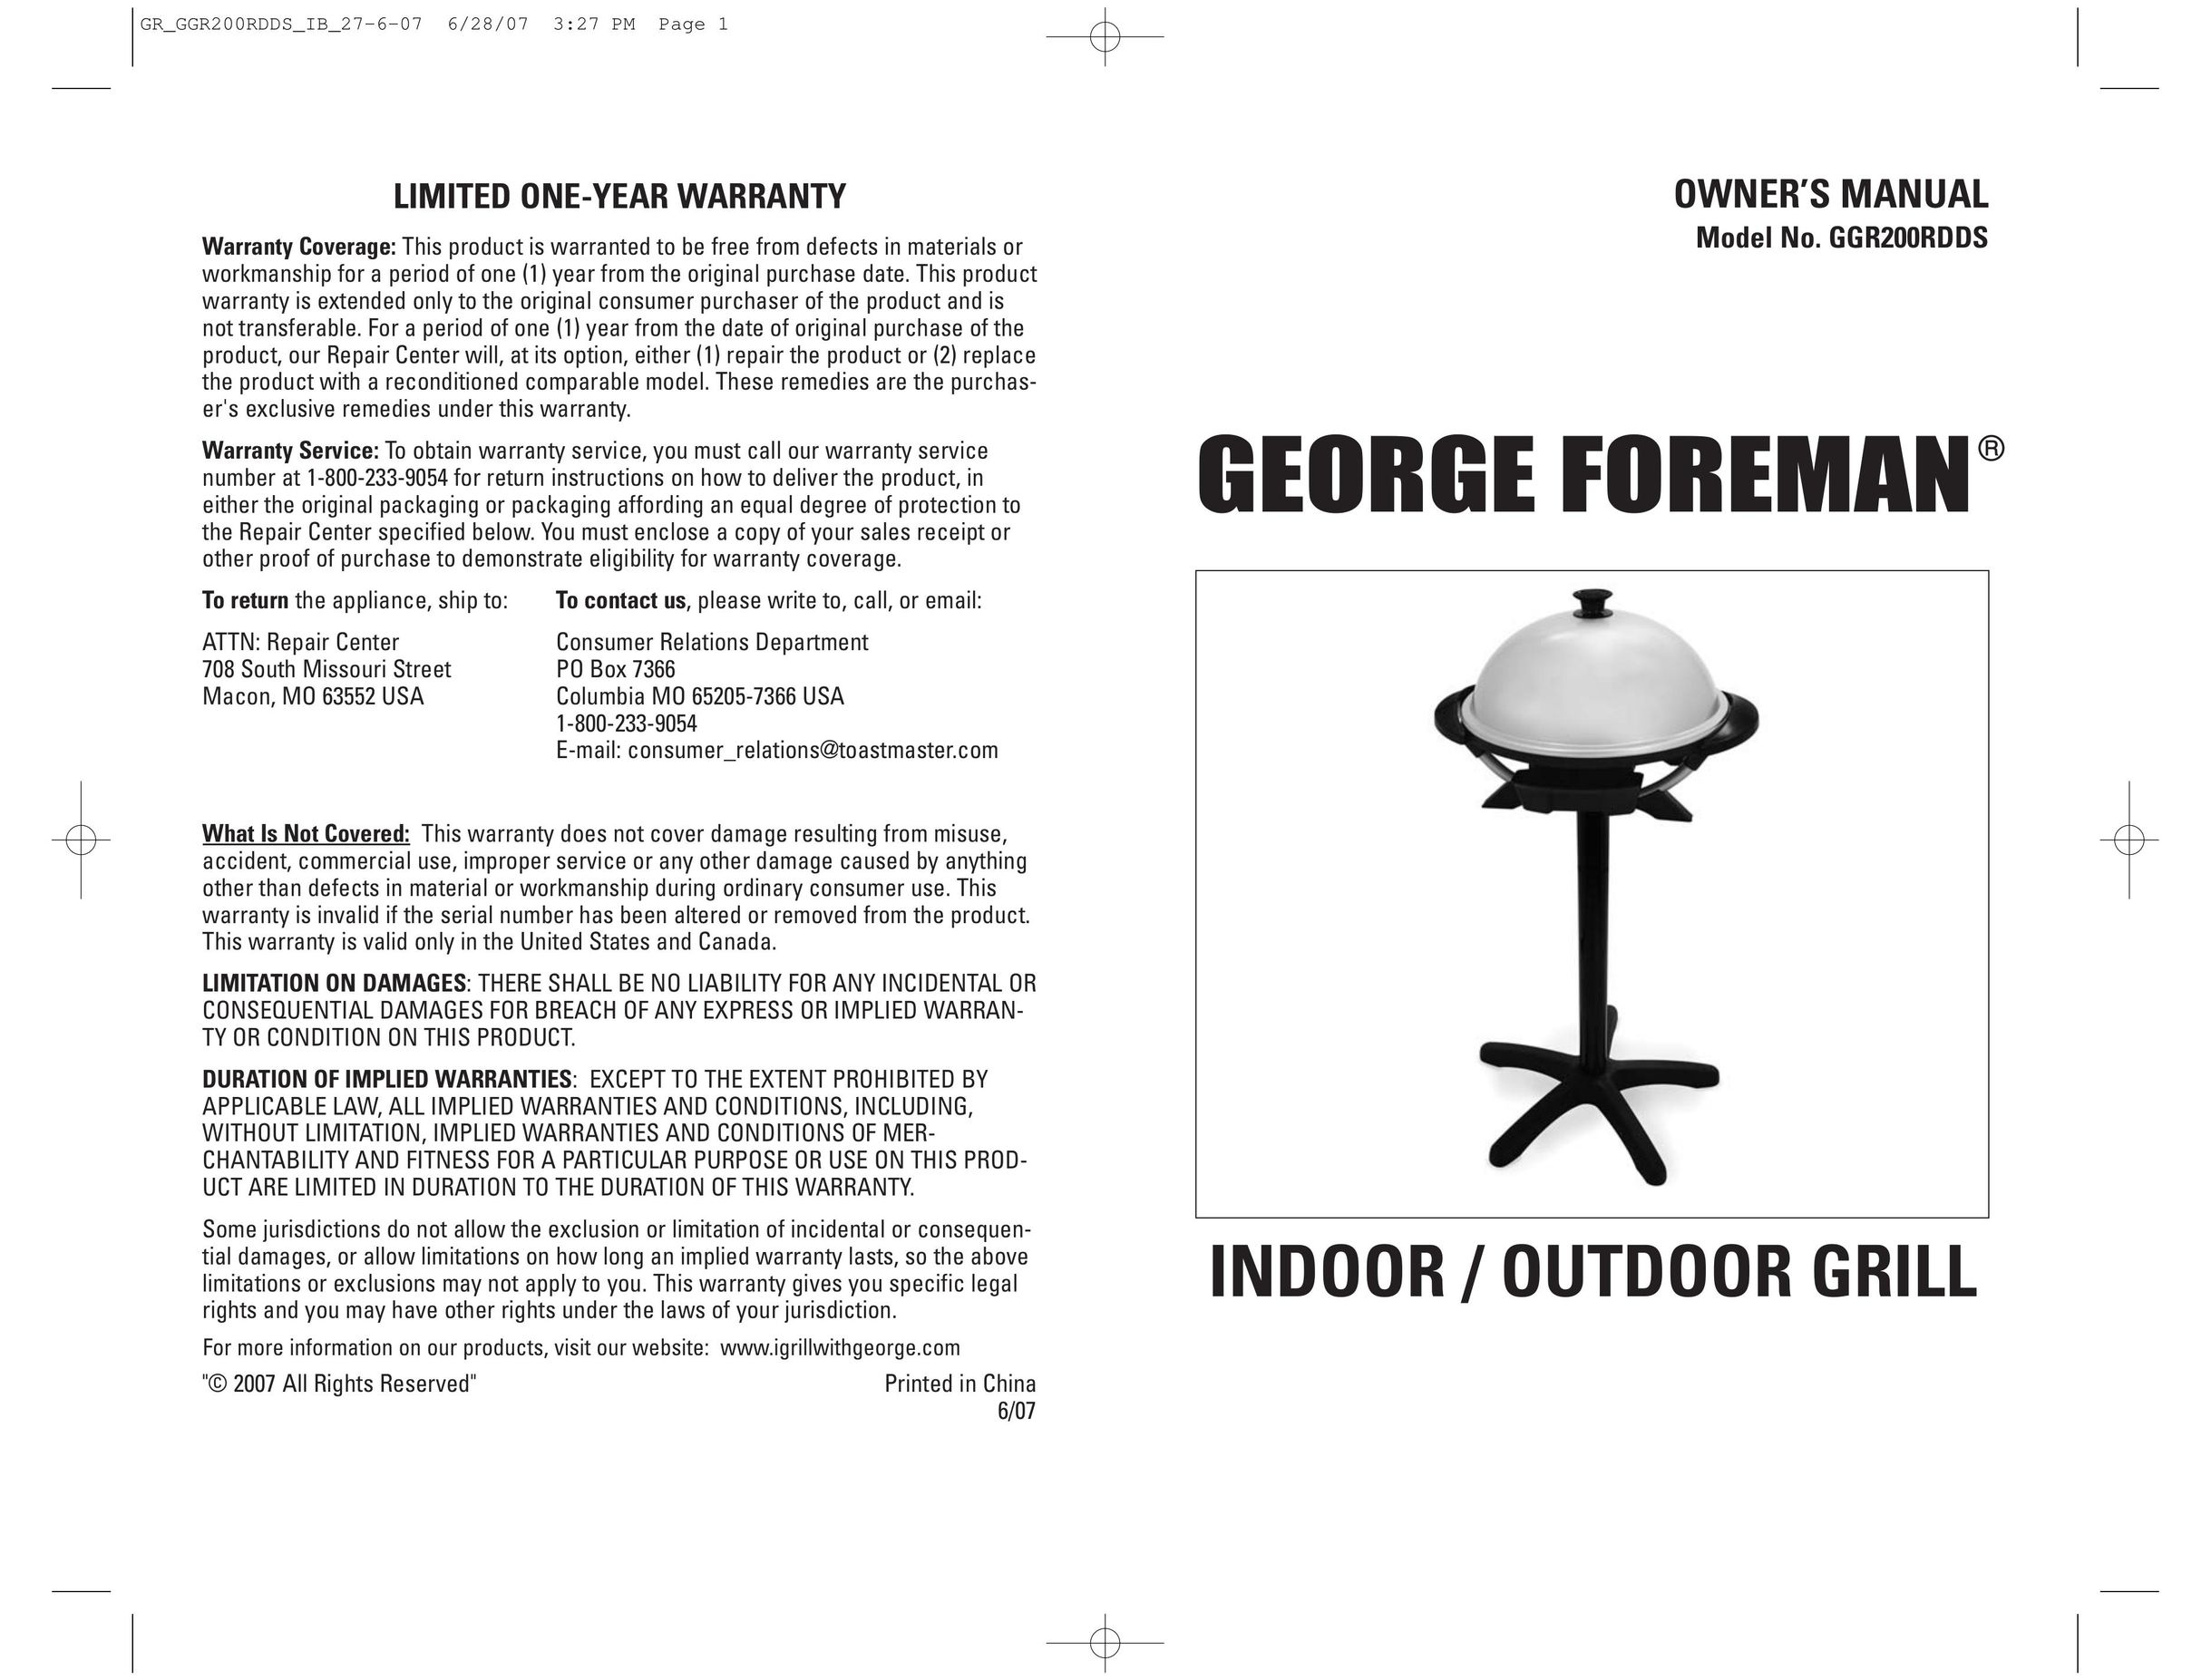 George Foreman GGR200RDDS Kitchen Grill User Manual